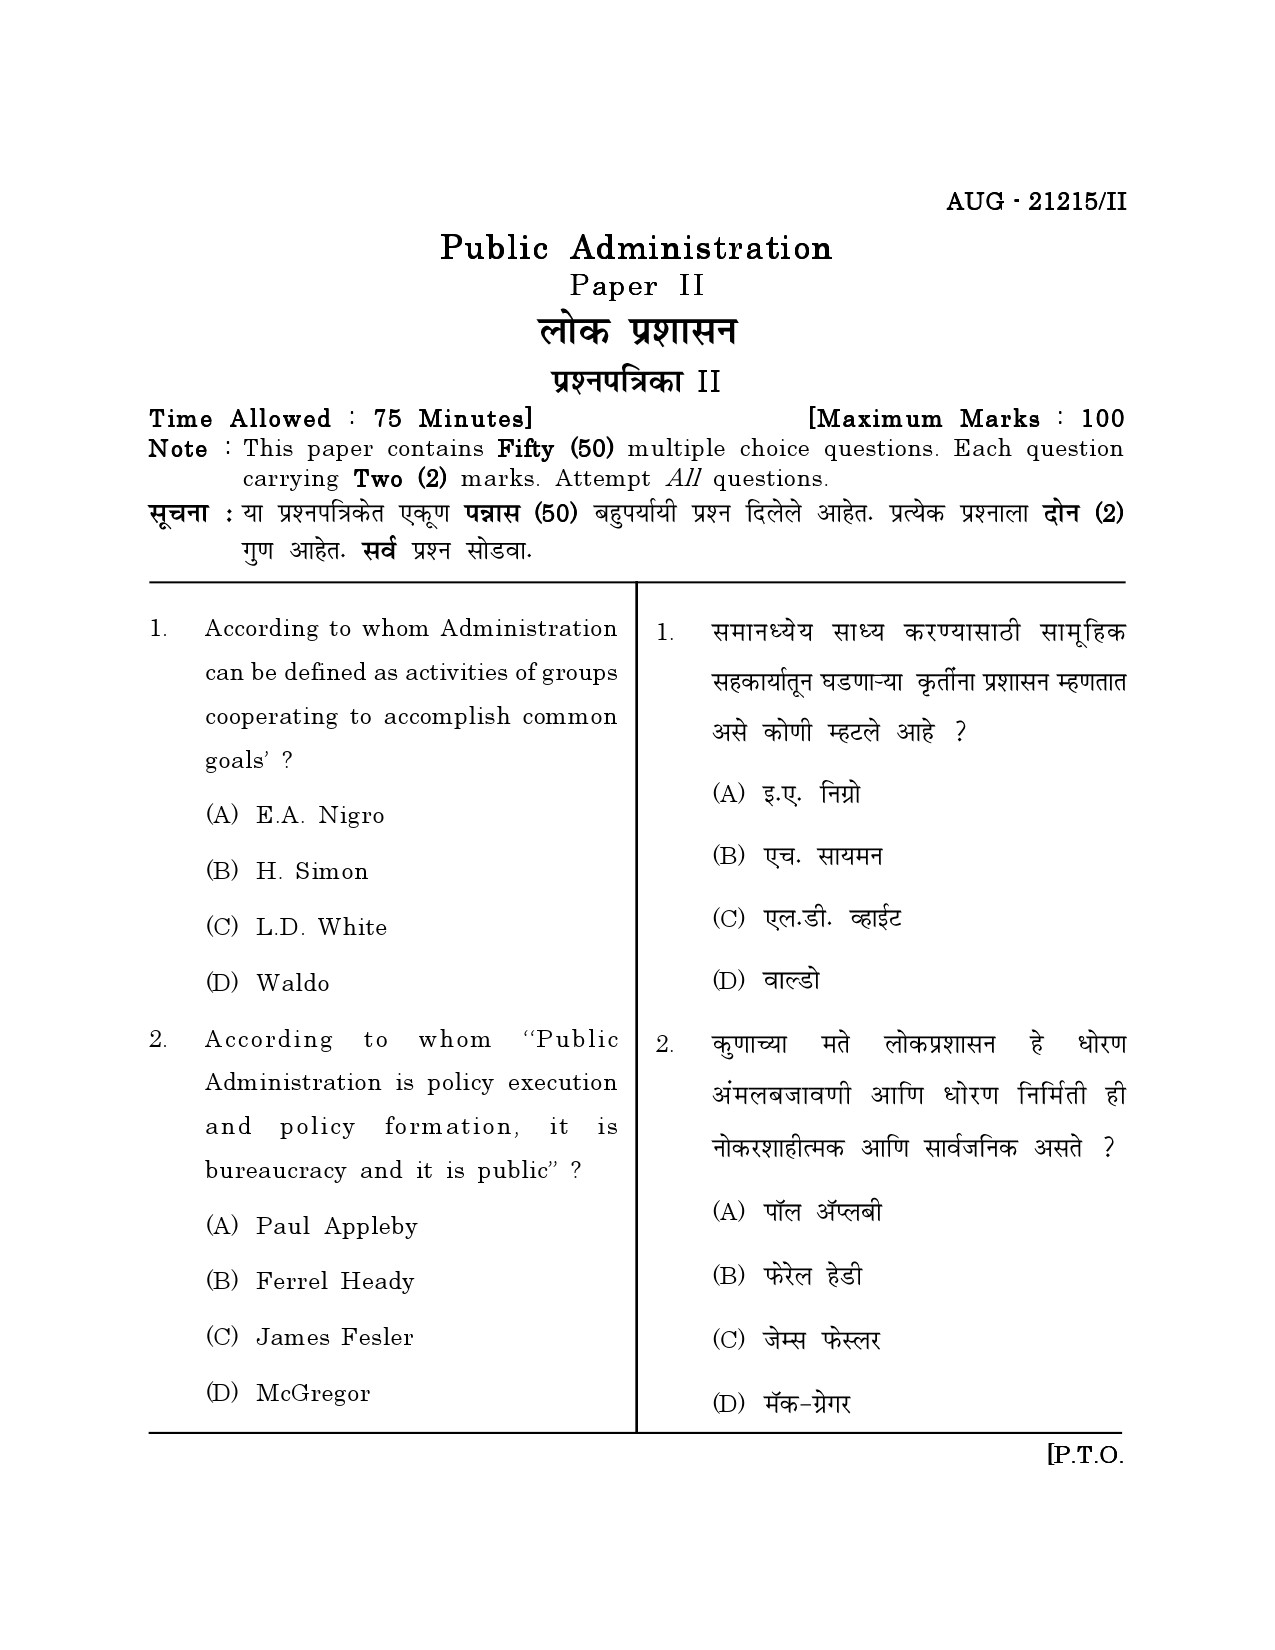 Maharashtra SET Public Administration Question Paper II August 2015 2